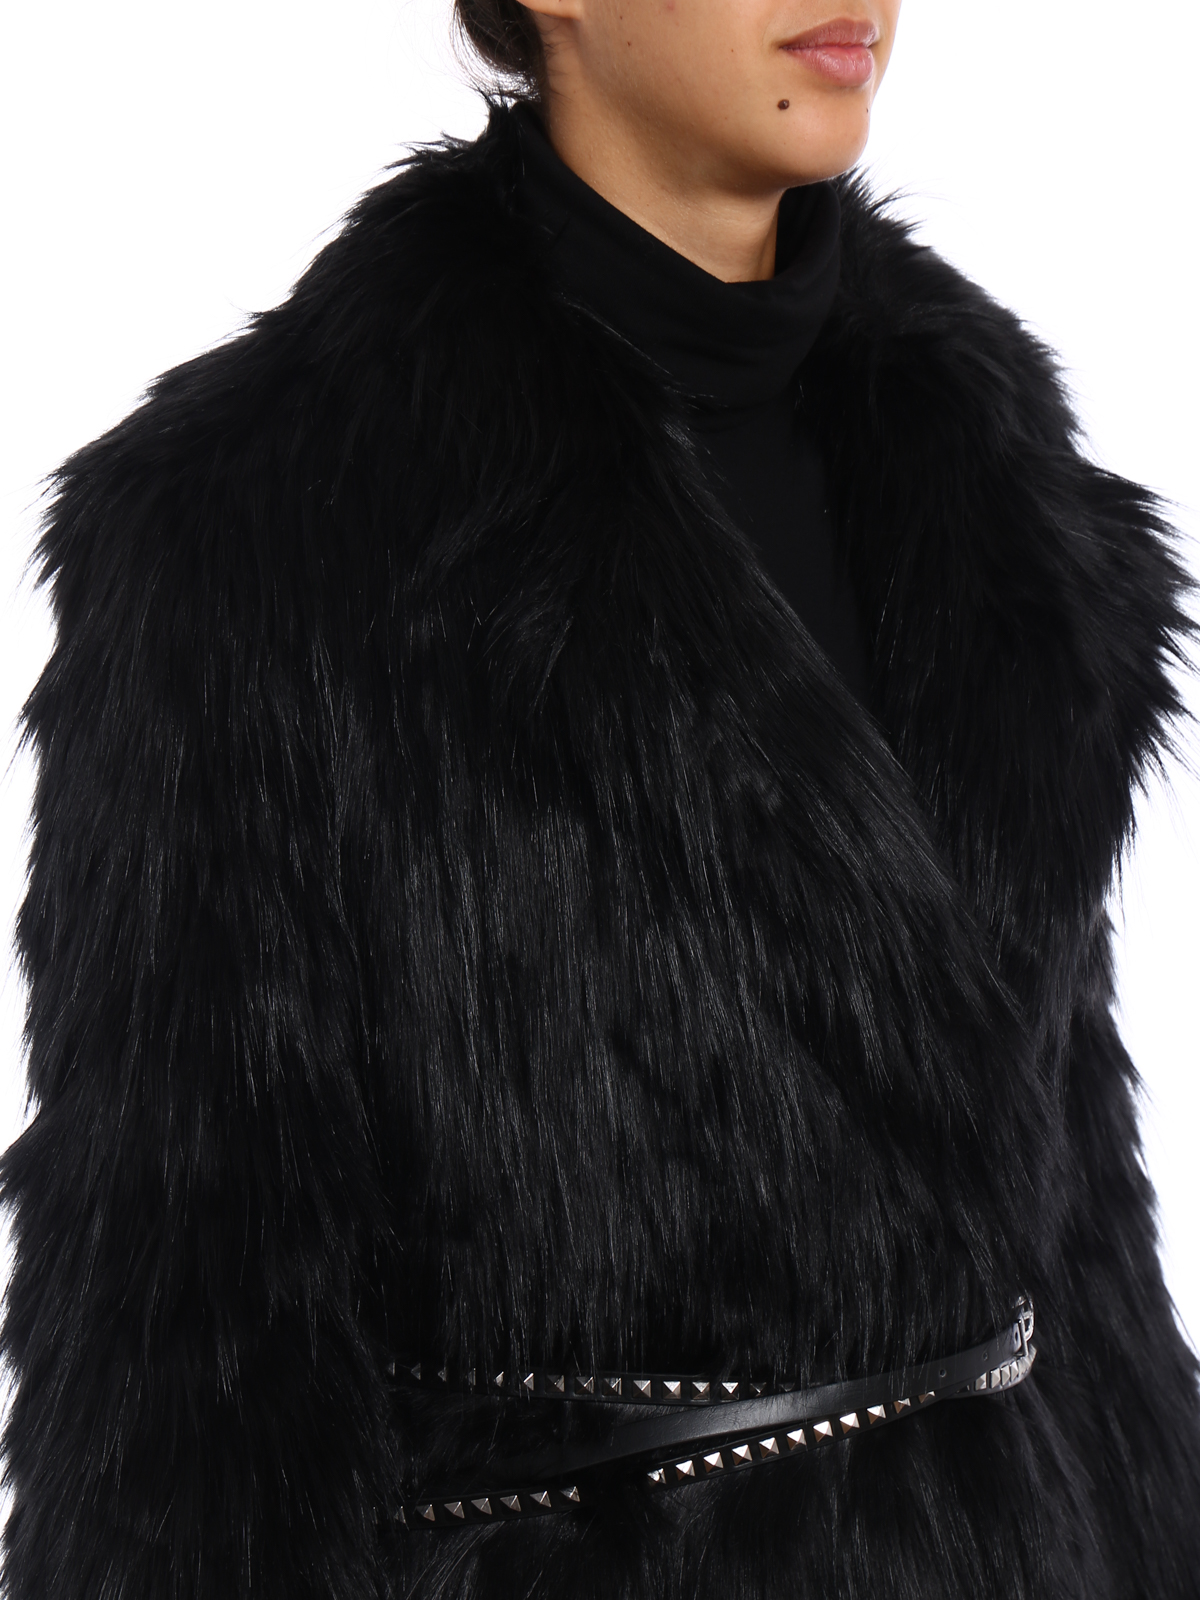 michael kors jacket with fur